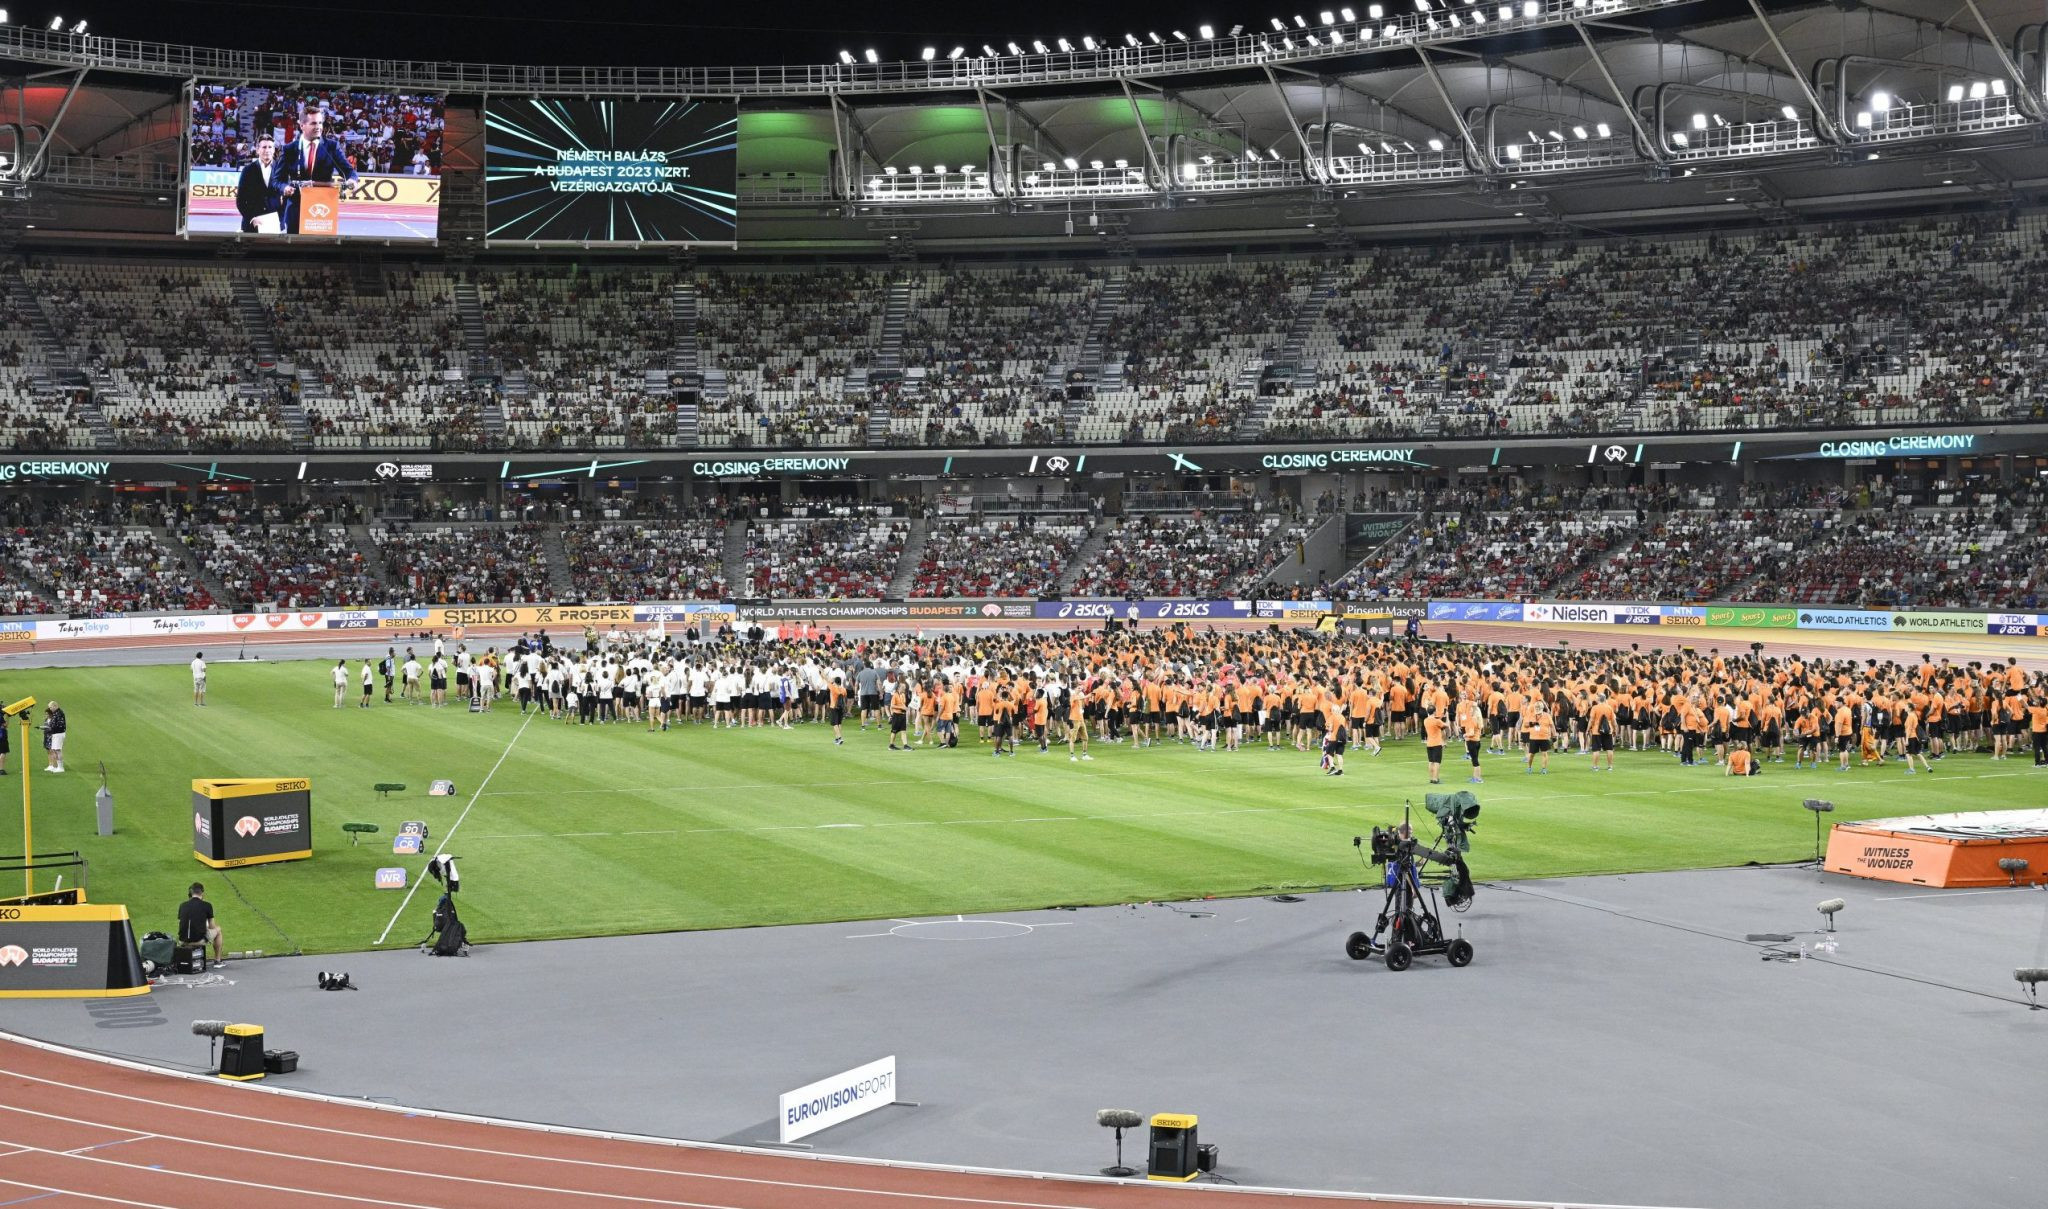 World Athletics President Sebastian Coe praised Budapest's volunteers at the Closing Ceremony ©Budapest 2023